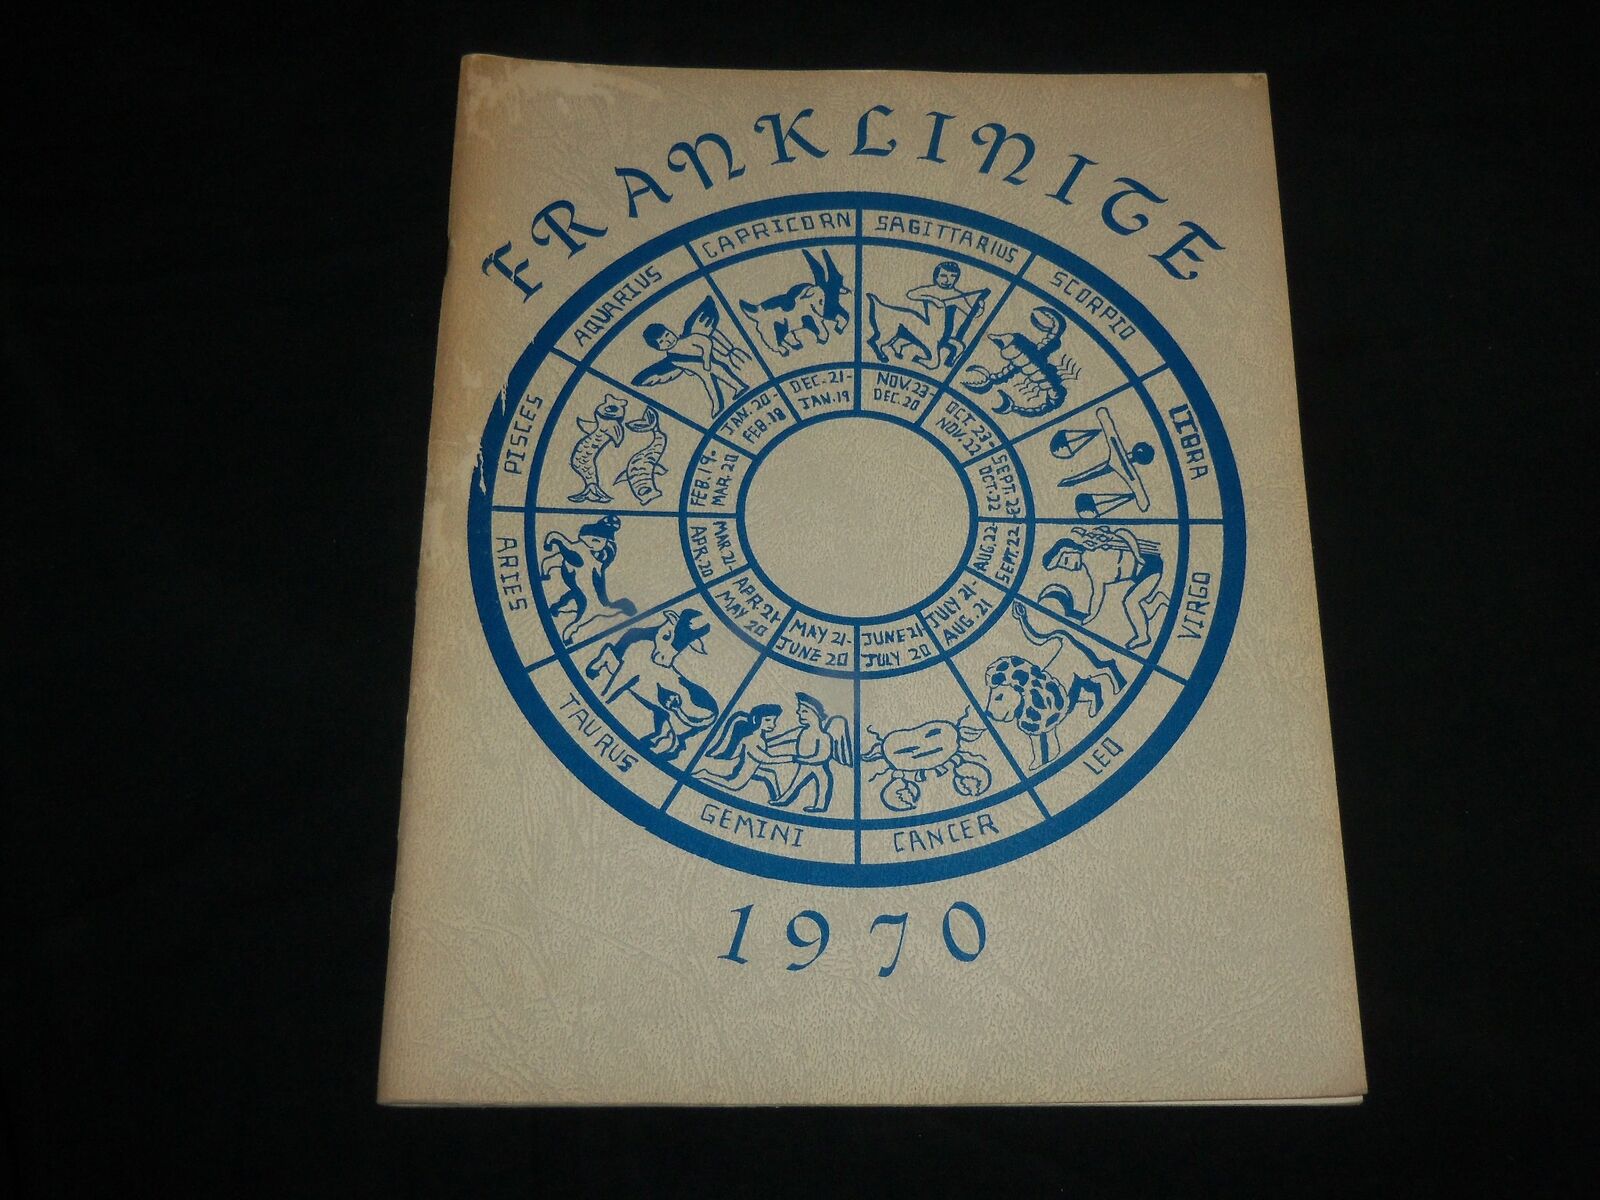 1970 FRANKLINITE FRANKLIN SCHOOL YEARBOOK - NEW JERSEY - J 6844